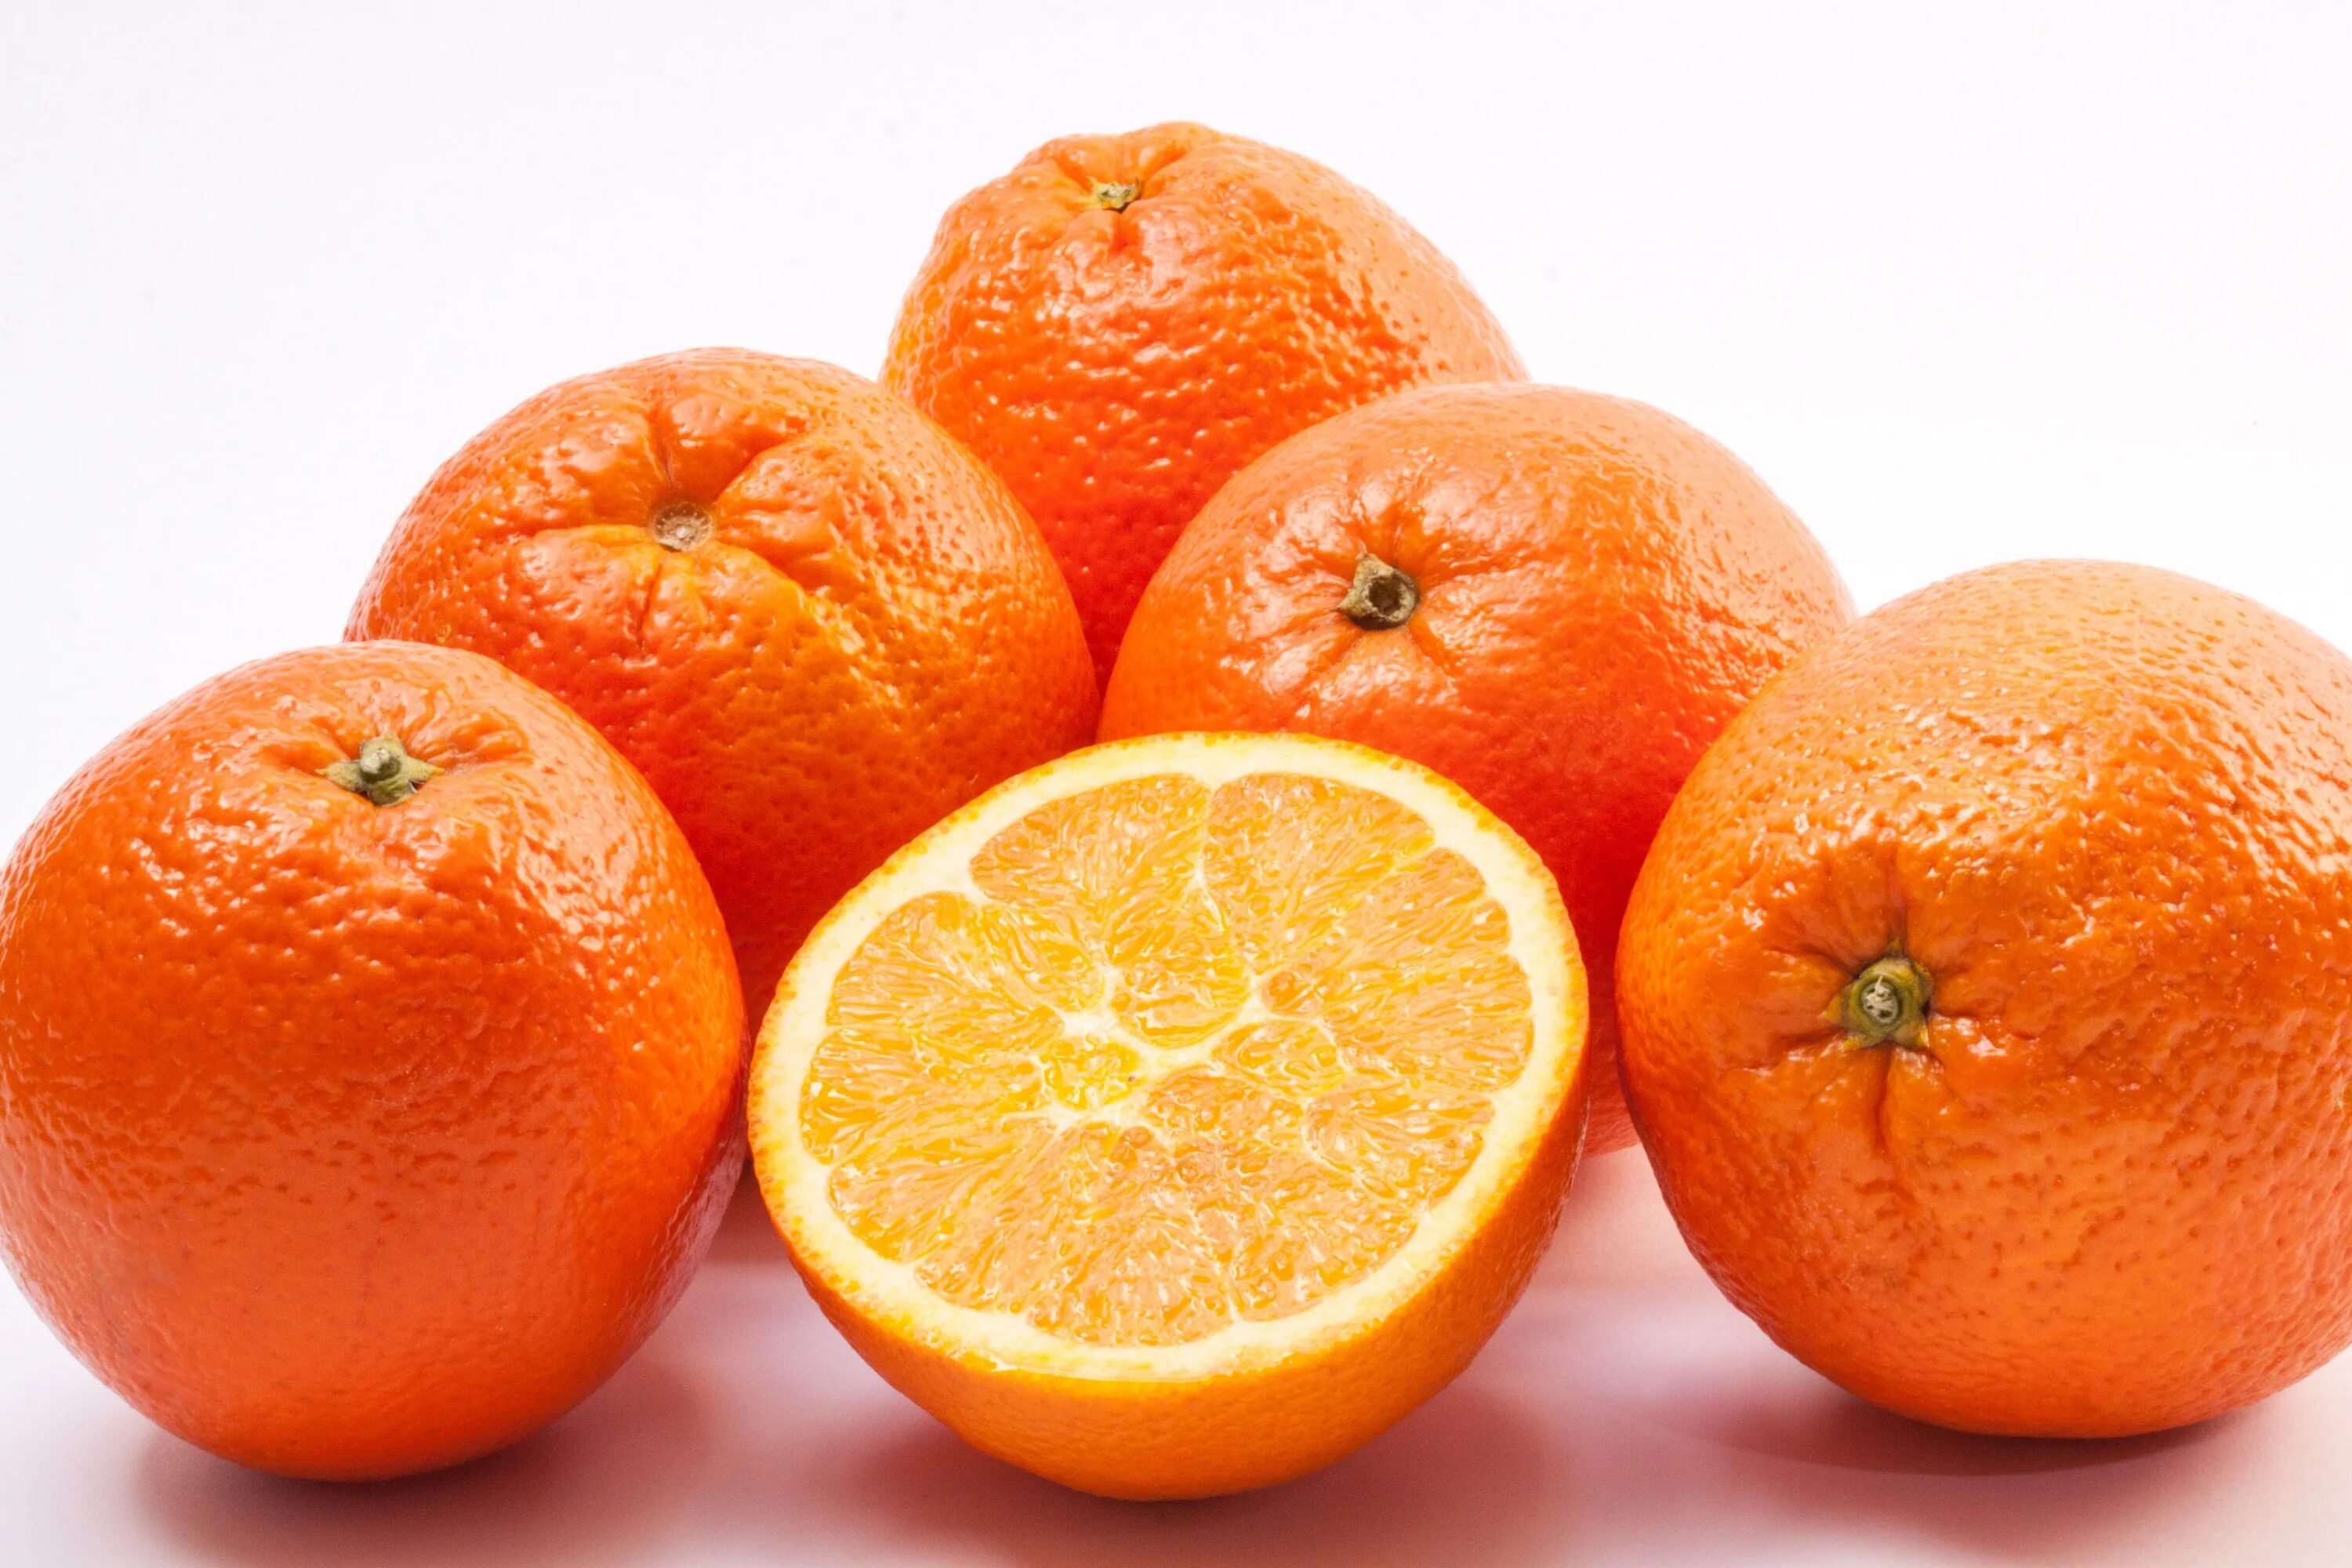 Orange choose. Орендж апельсин а мандарин. Апельсин navel. Померанец фрукт. Апельсин на белом фоне.